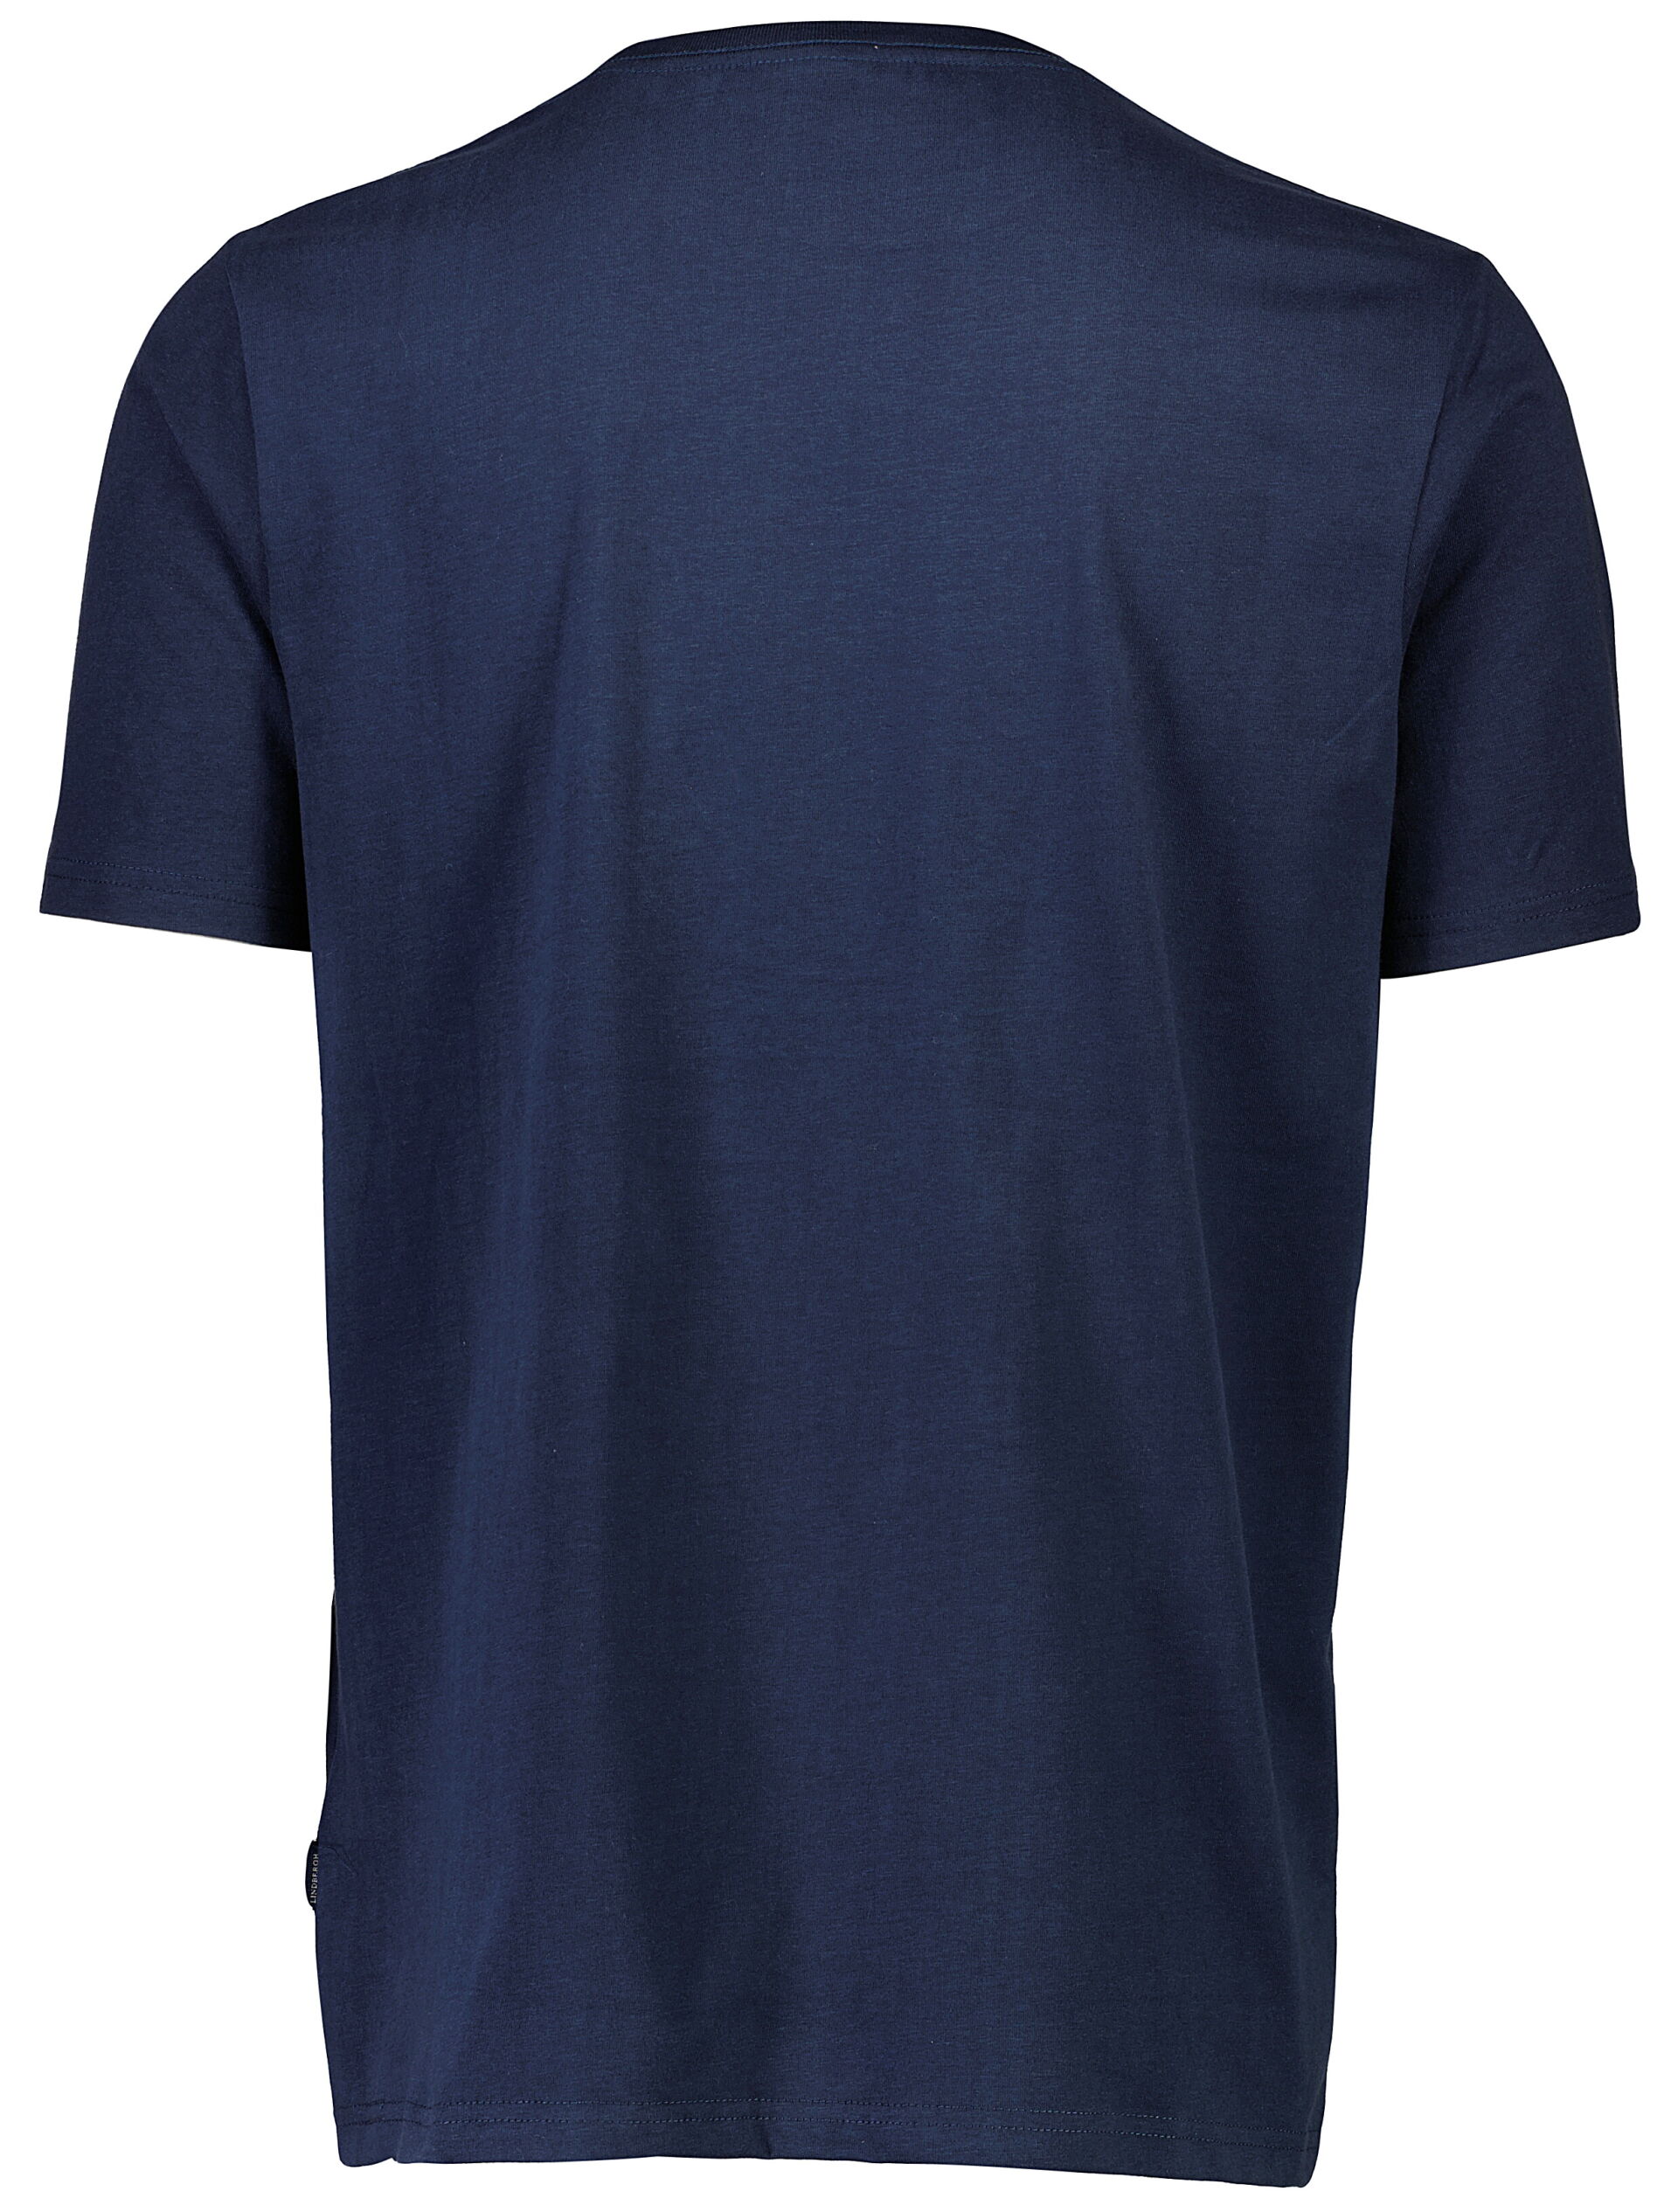 Lindbergh  T-shirt 30-420091